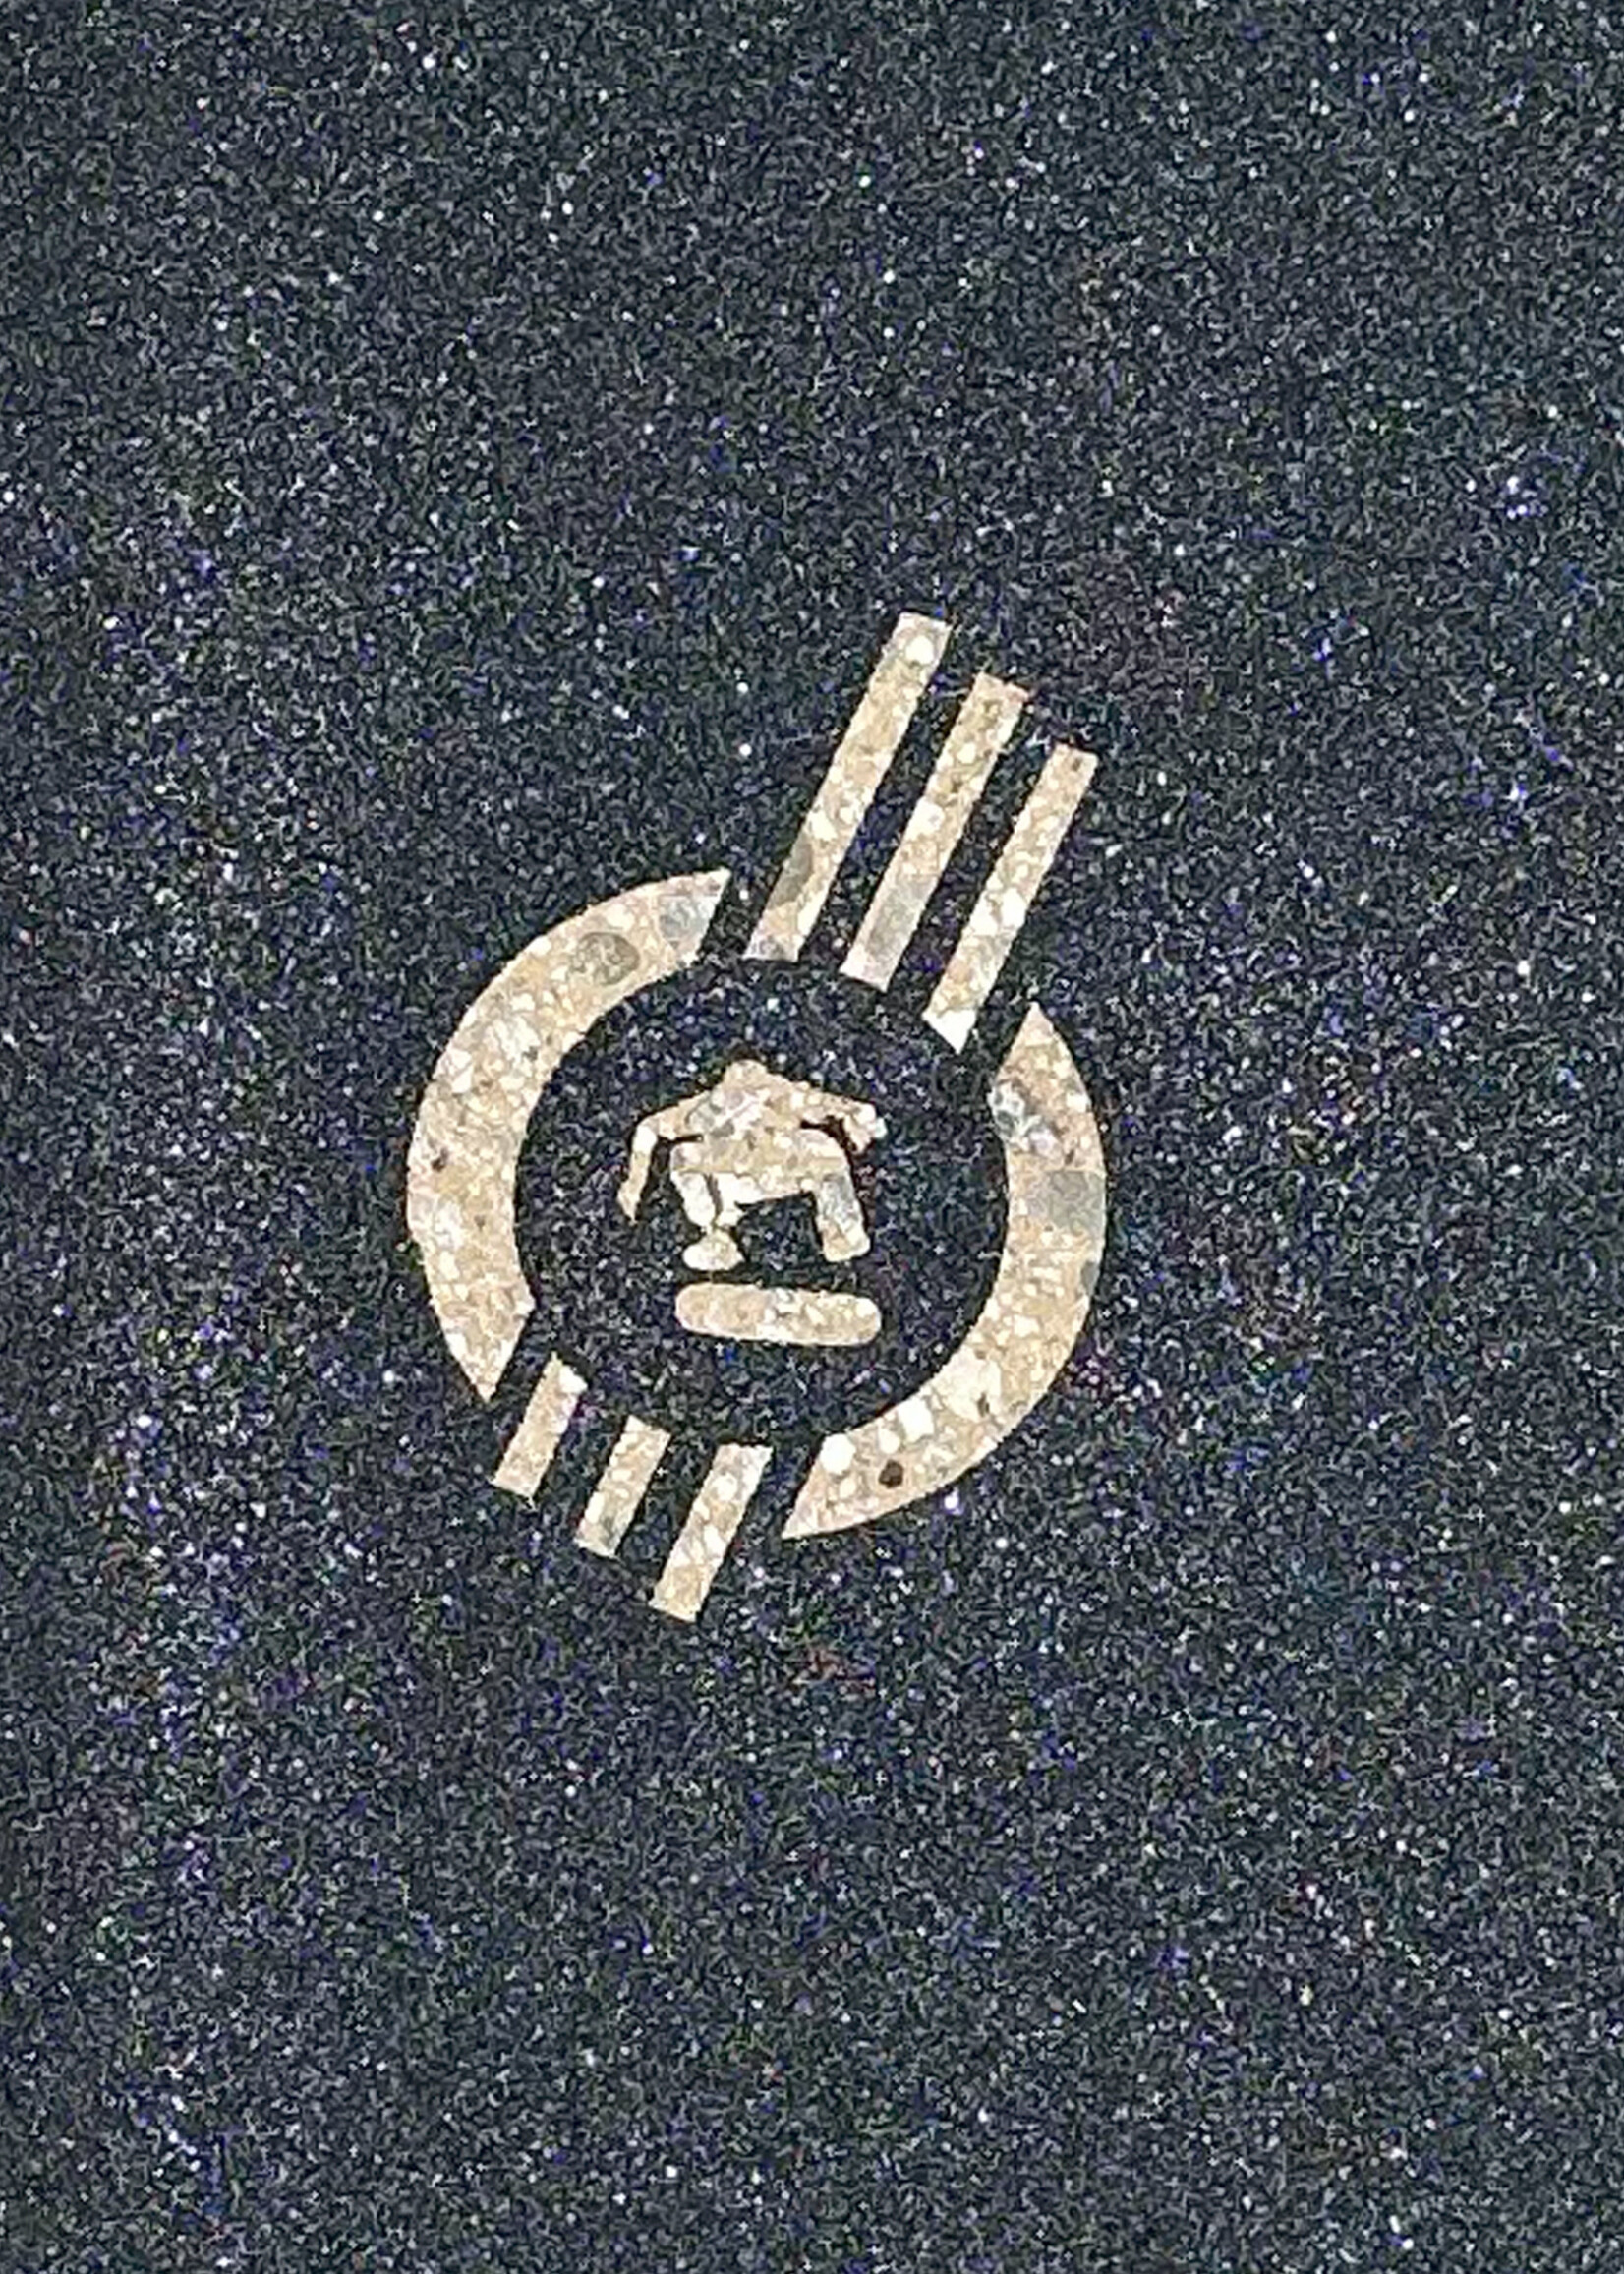 AMGRIP AMGRIP - Force Wheels Logo Cutout - Black 9" x 33"